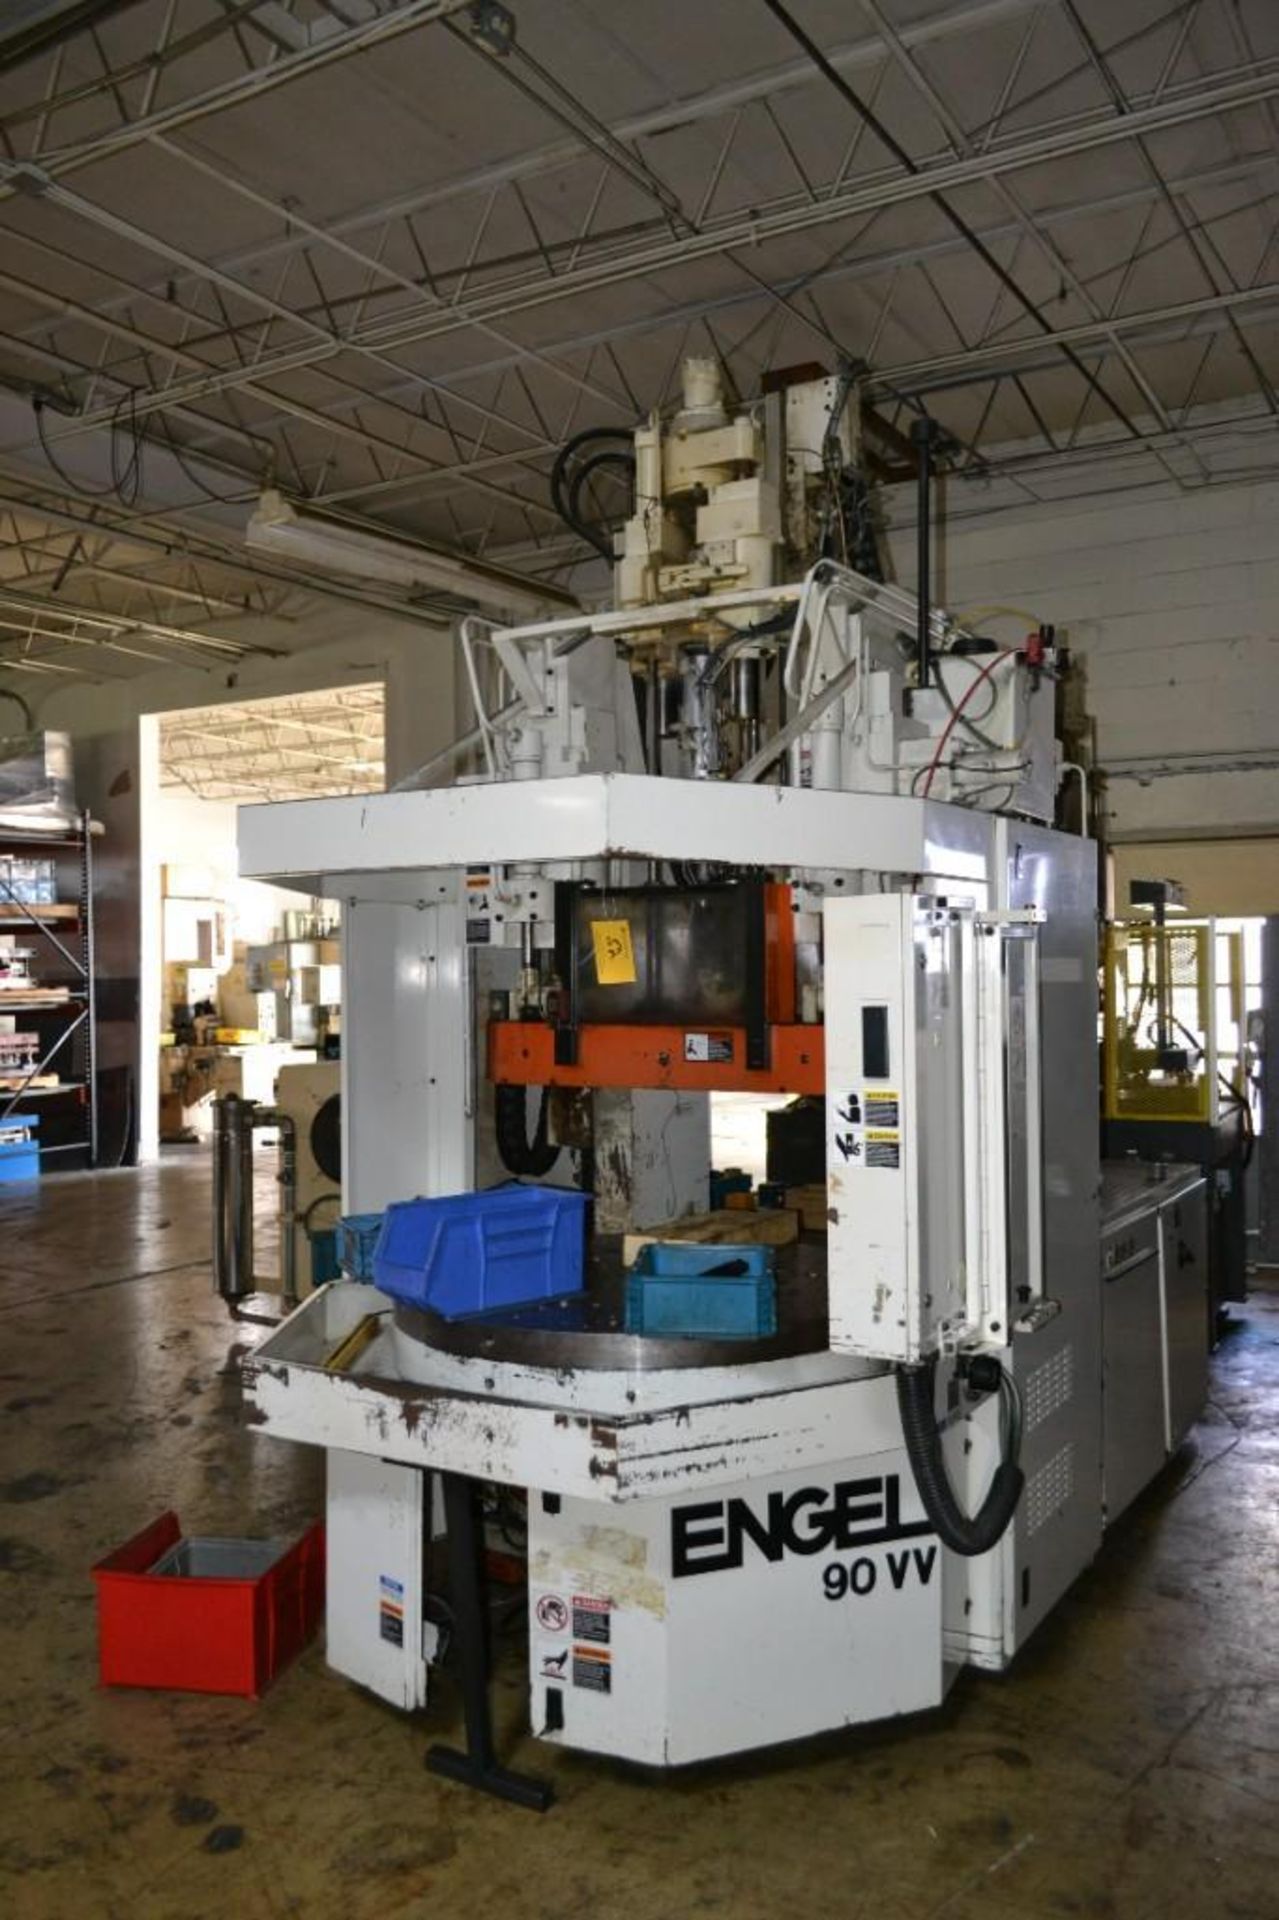 Engel 90 Ton 5.8 oz. Rotary Platen Vertical Injection Molding Machine, 90VV Model ES200/90VROTL